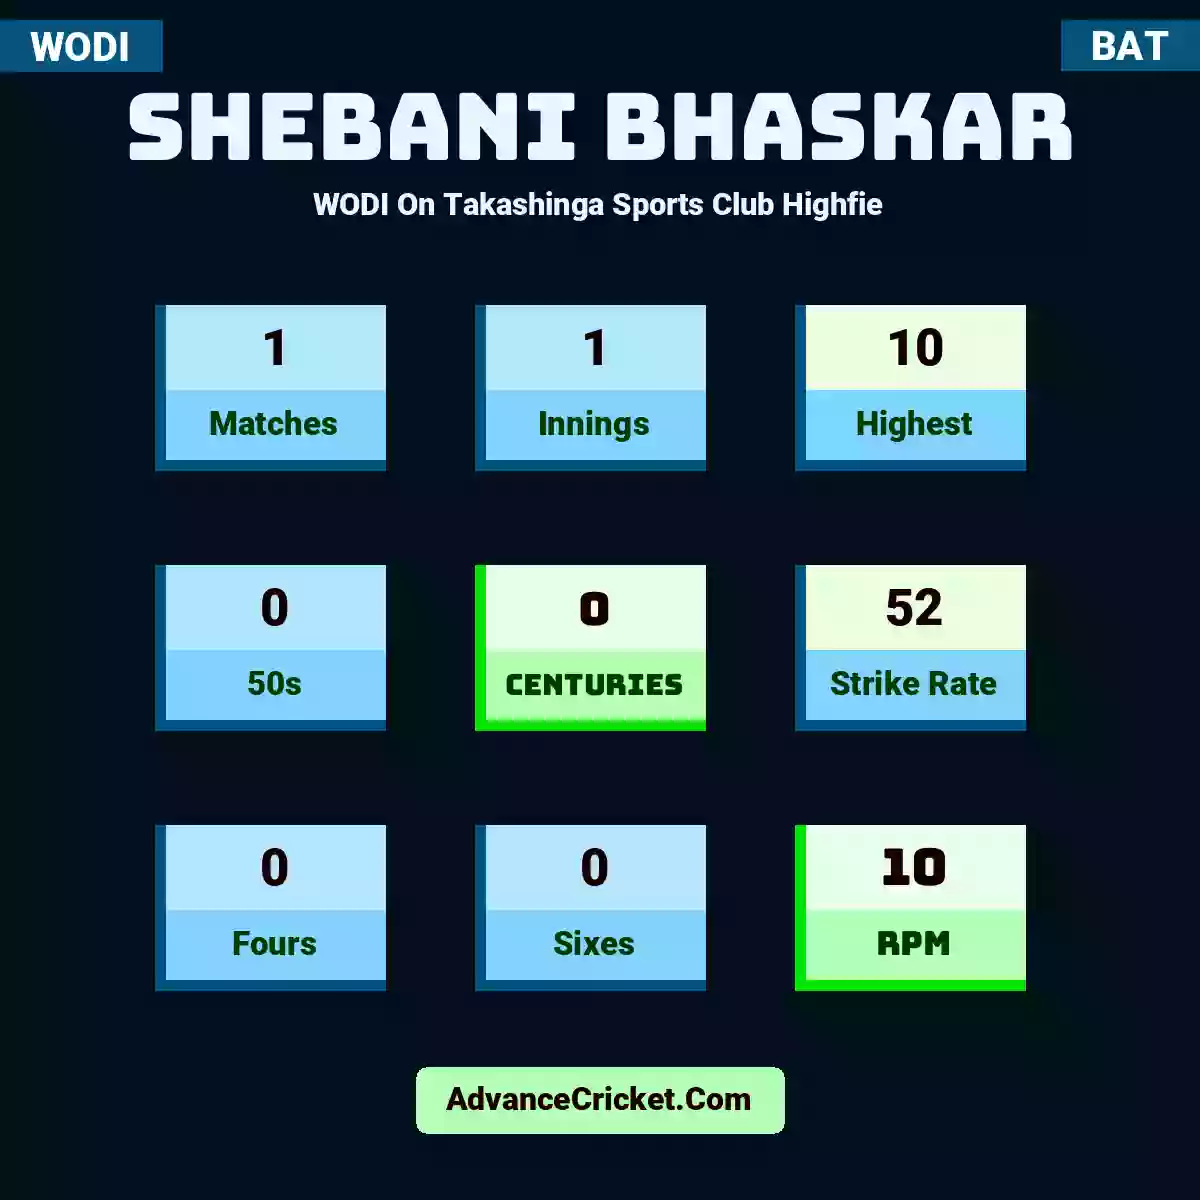 Shebani Bhaskar WODI  On Takashinga Sports Club Highfie, Shebani Bhaskar played 1 matches, scored 10 runs as highest, 0 half-centuries, and 0 centuries, with a strike rate of 52. S.Bhaskar hit 0 fours and 0 sixes, with an RPM of 10.